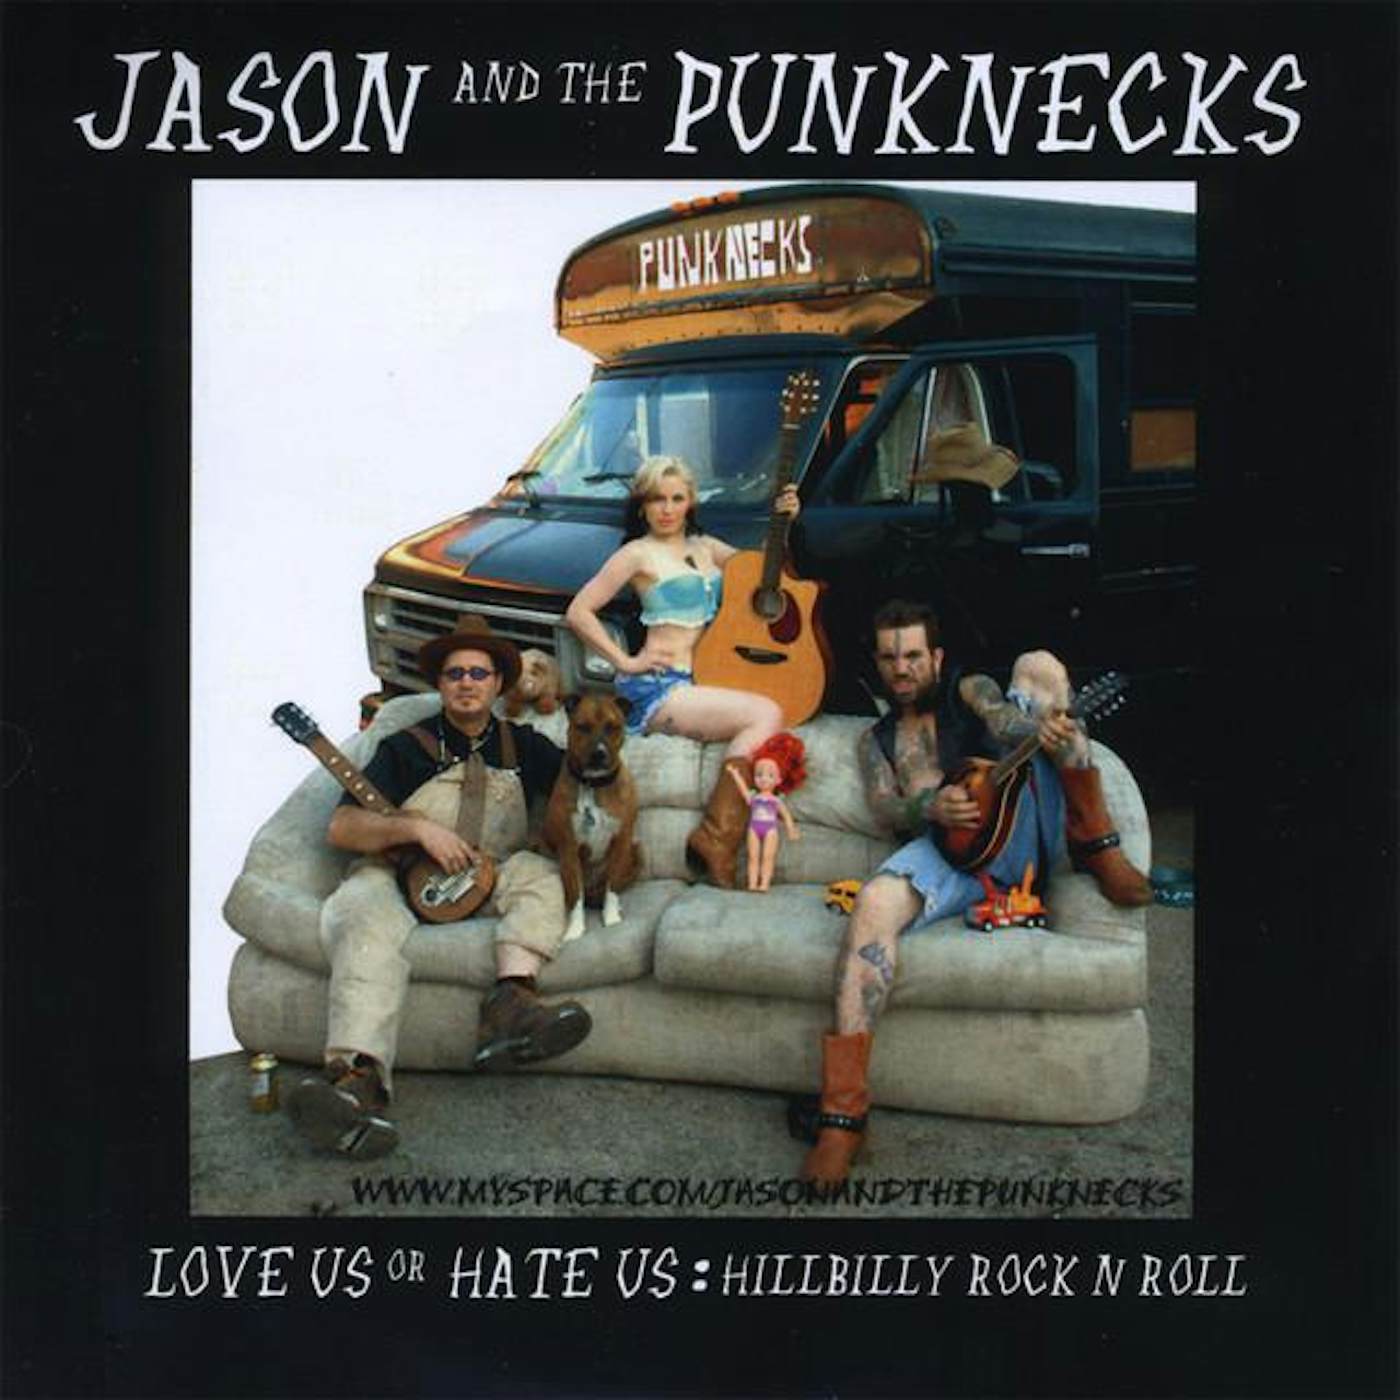 Jason and the Punknecks